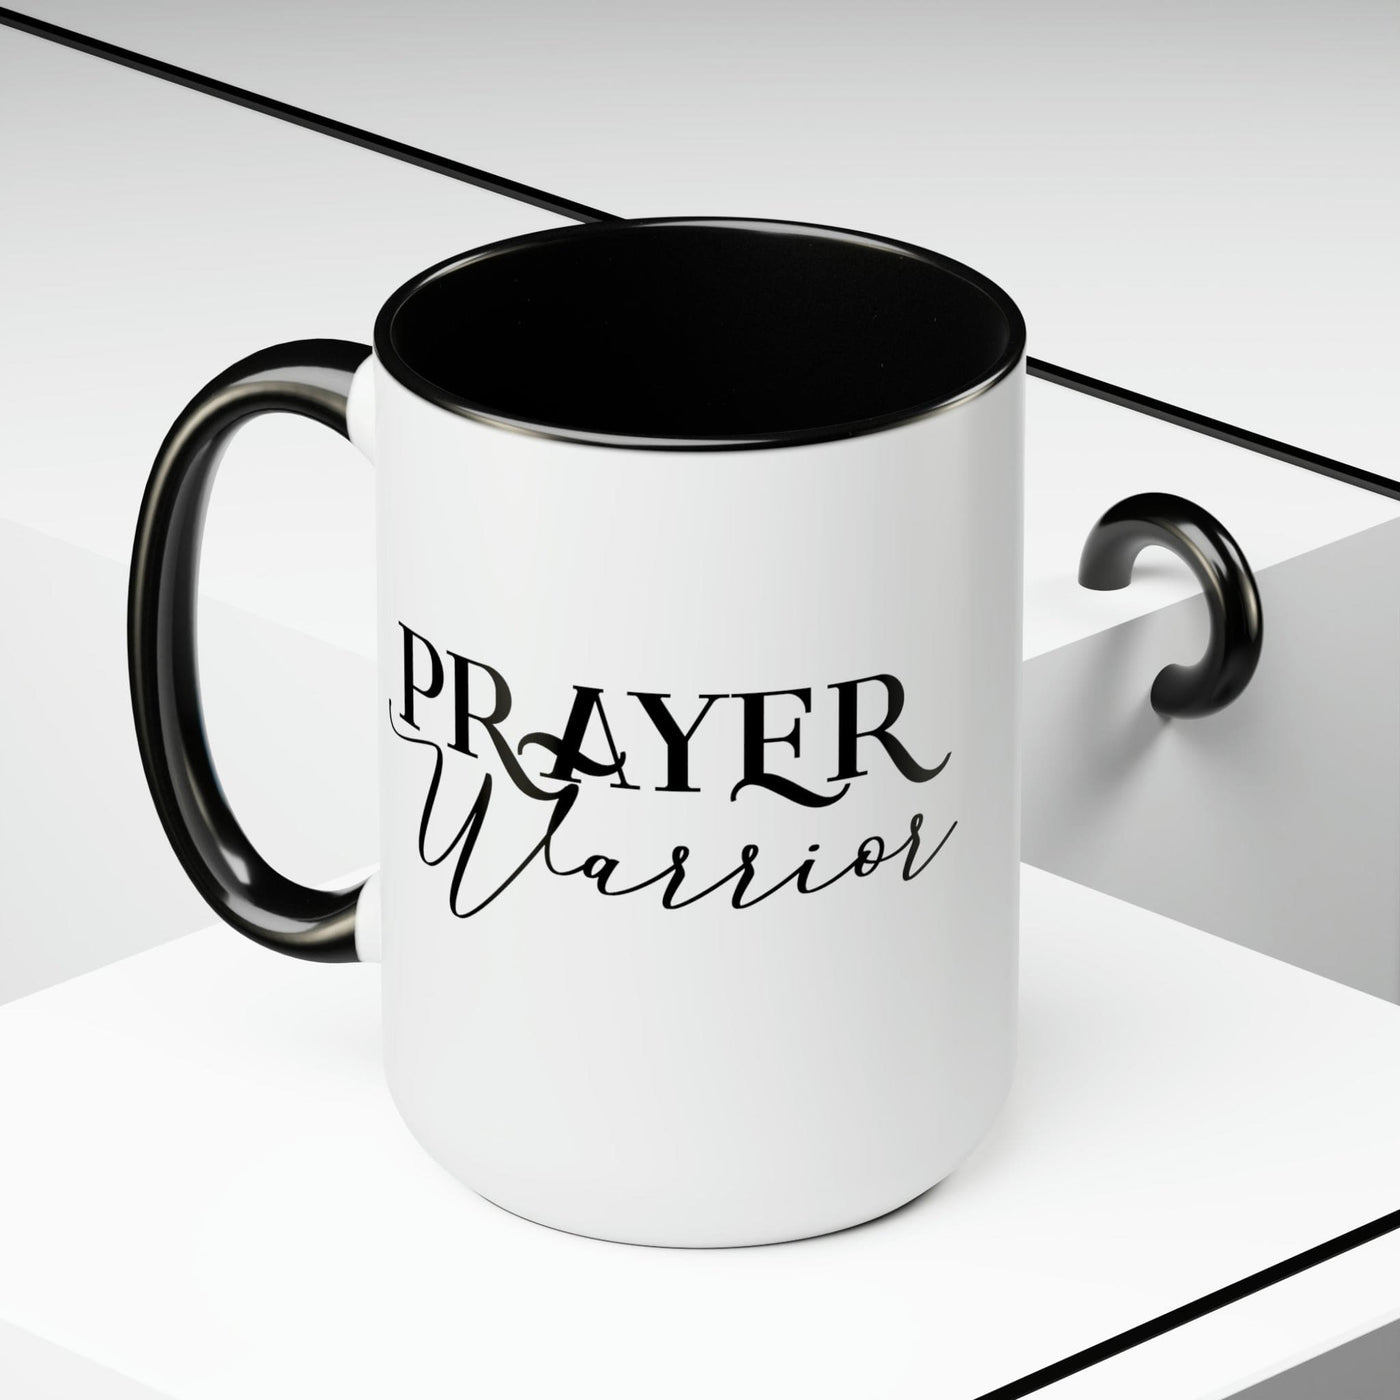 Accent Ceramic Coffee Mug 15oz - Prayer Warrior Black Illustration - Mug